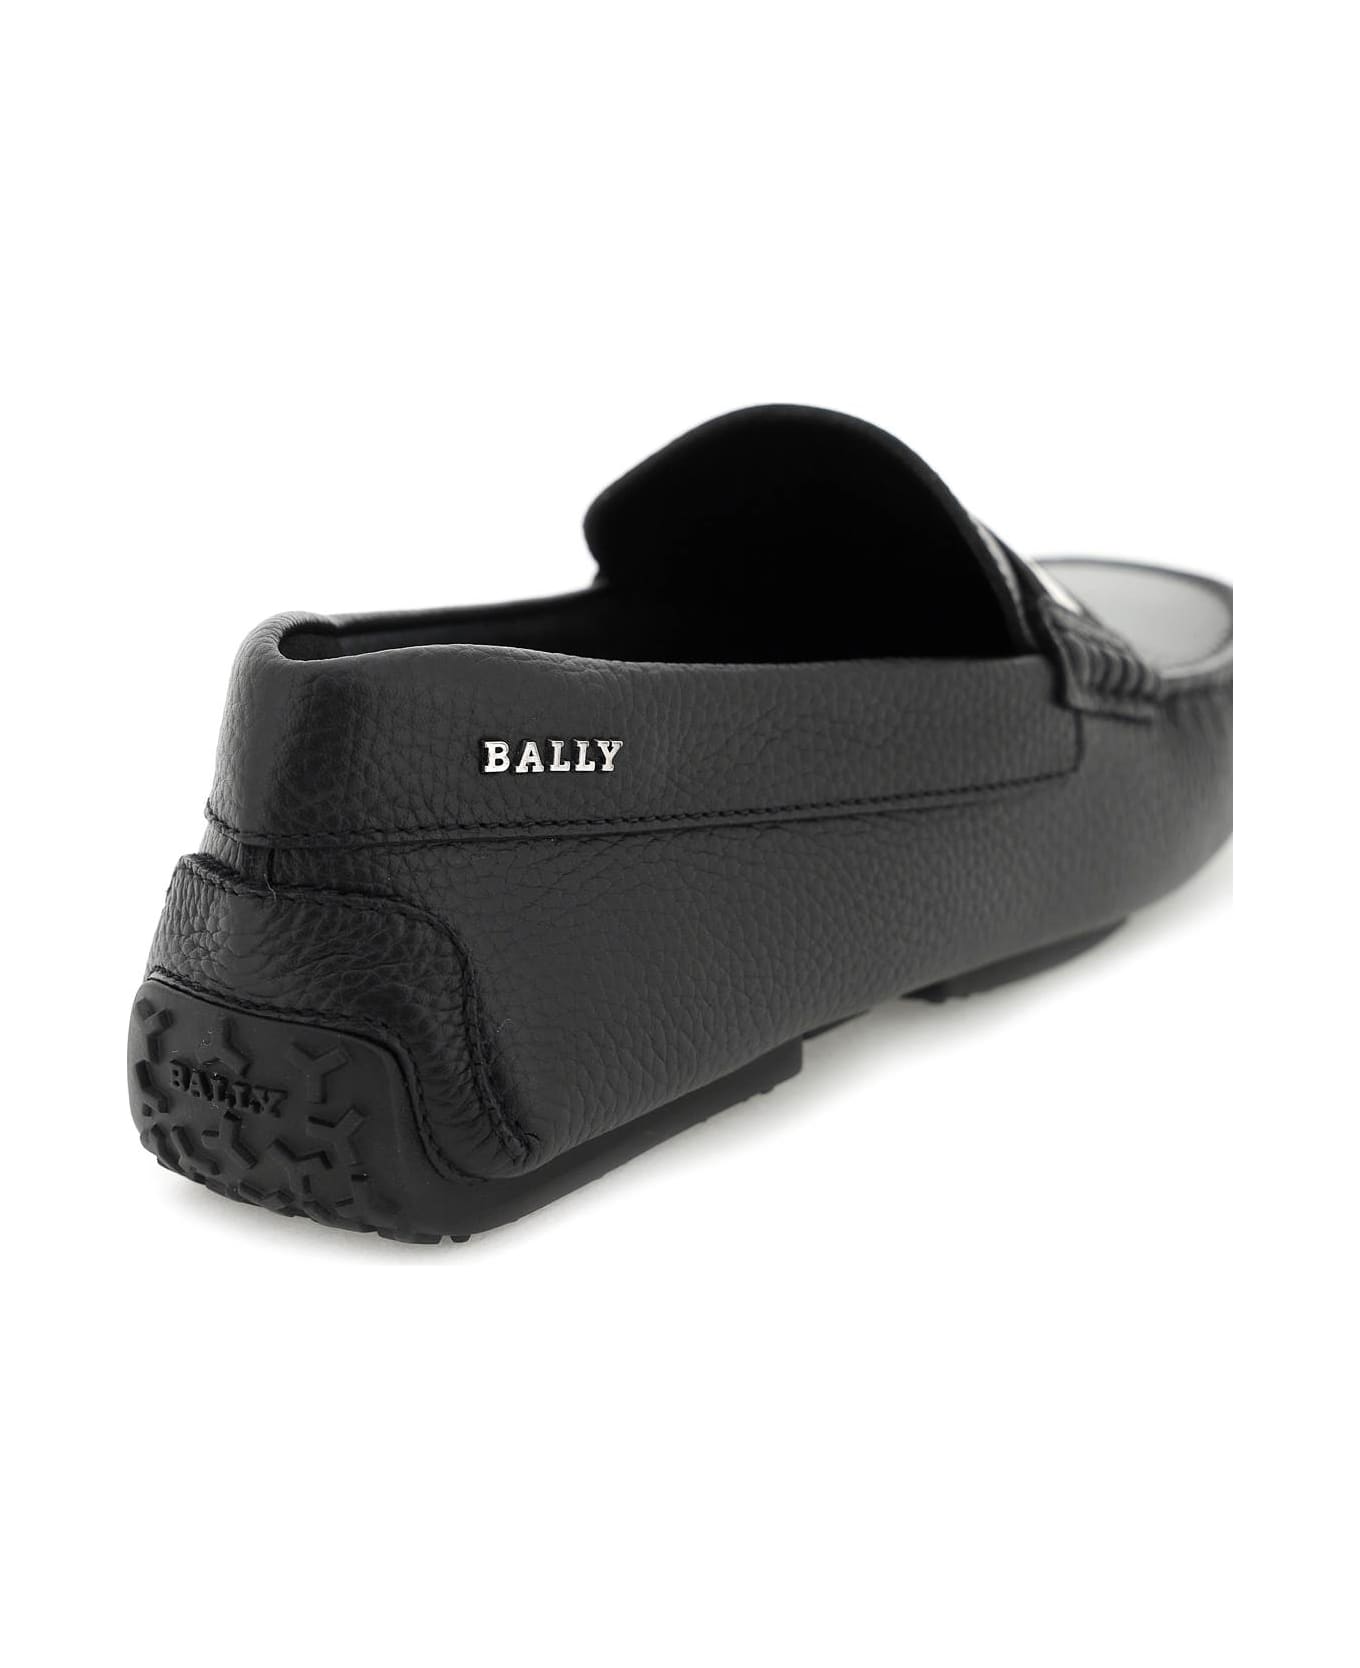 Bally 'pearce' Loafers - BLACK (Black)